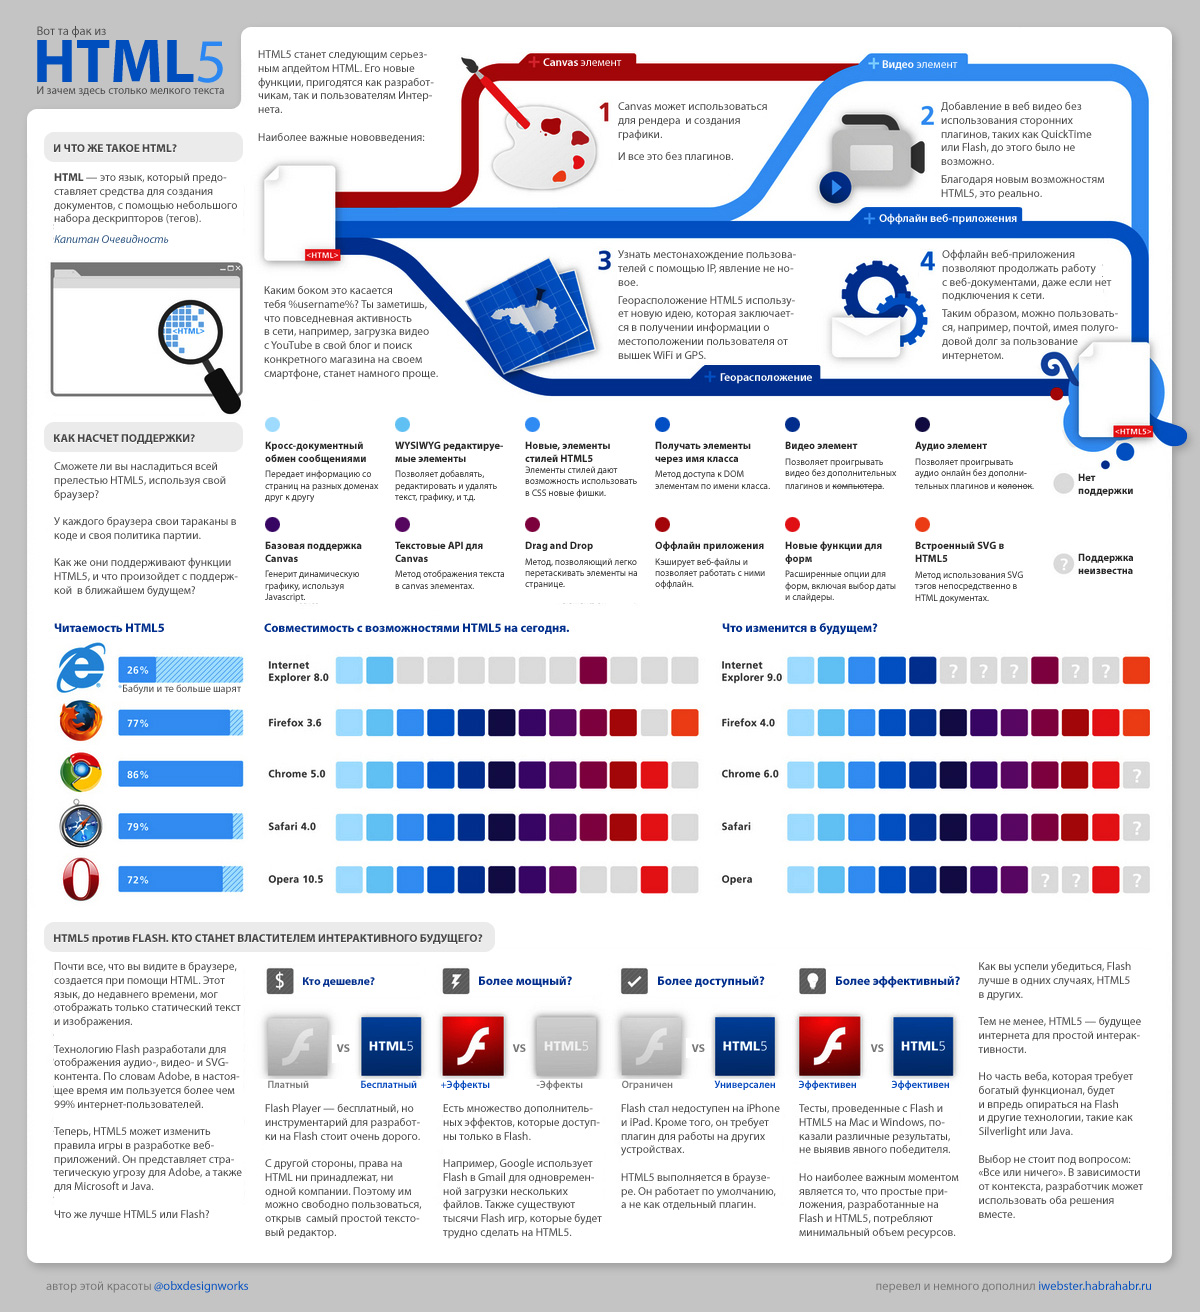 HTML5 в инфографике